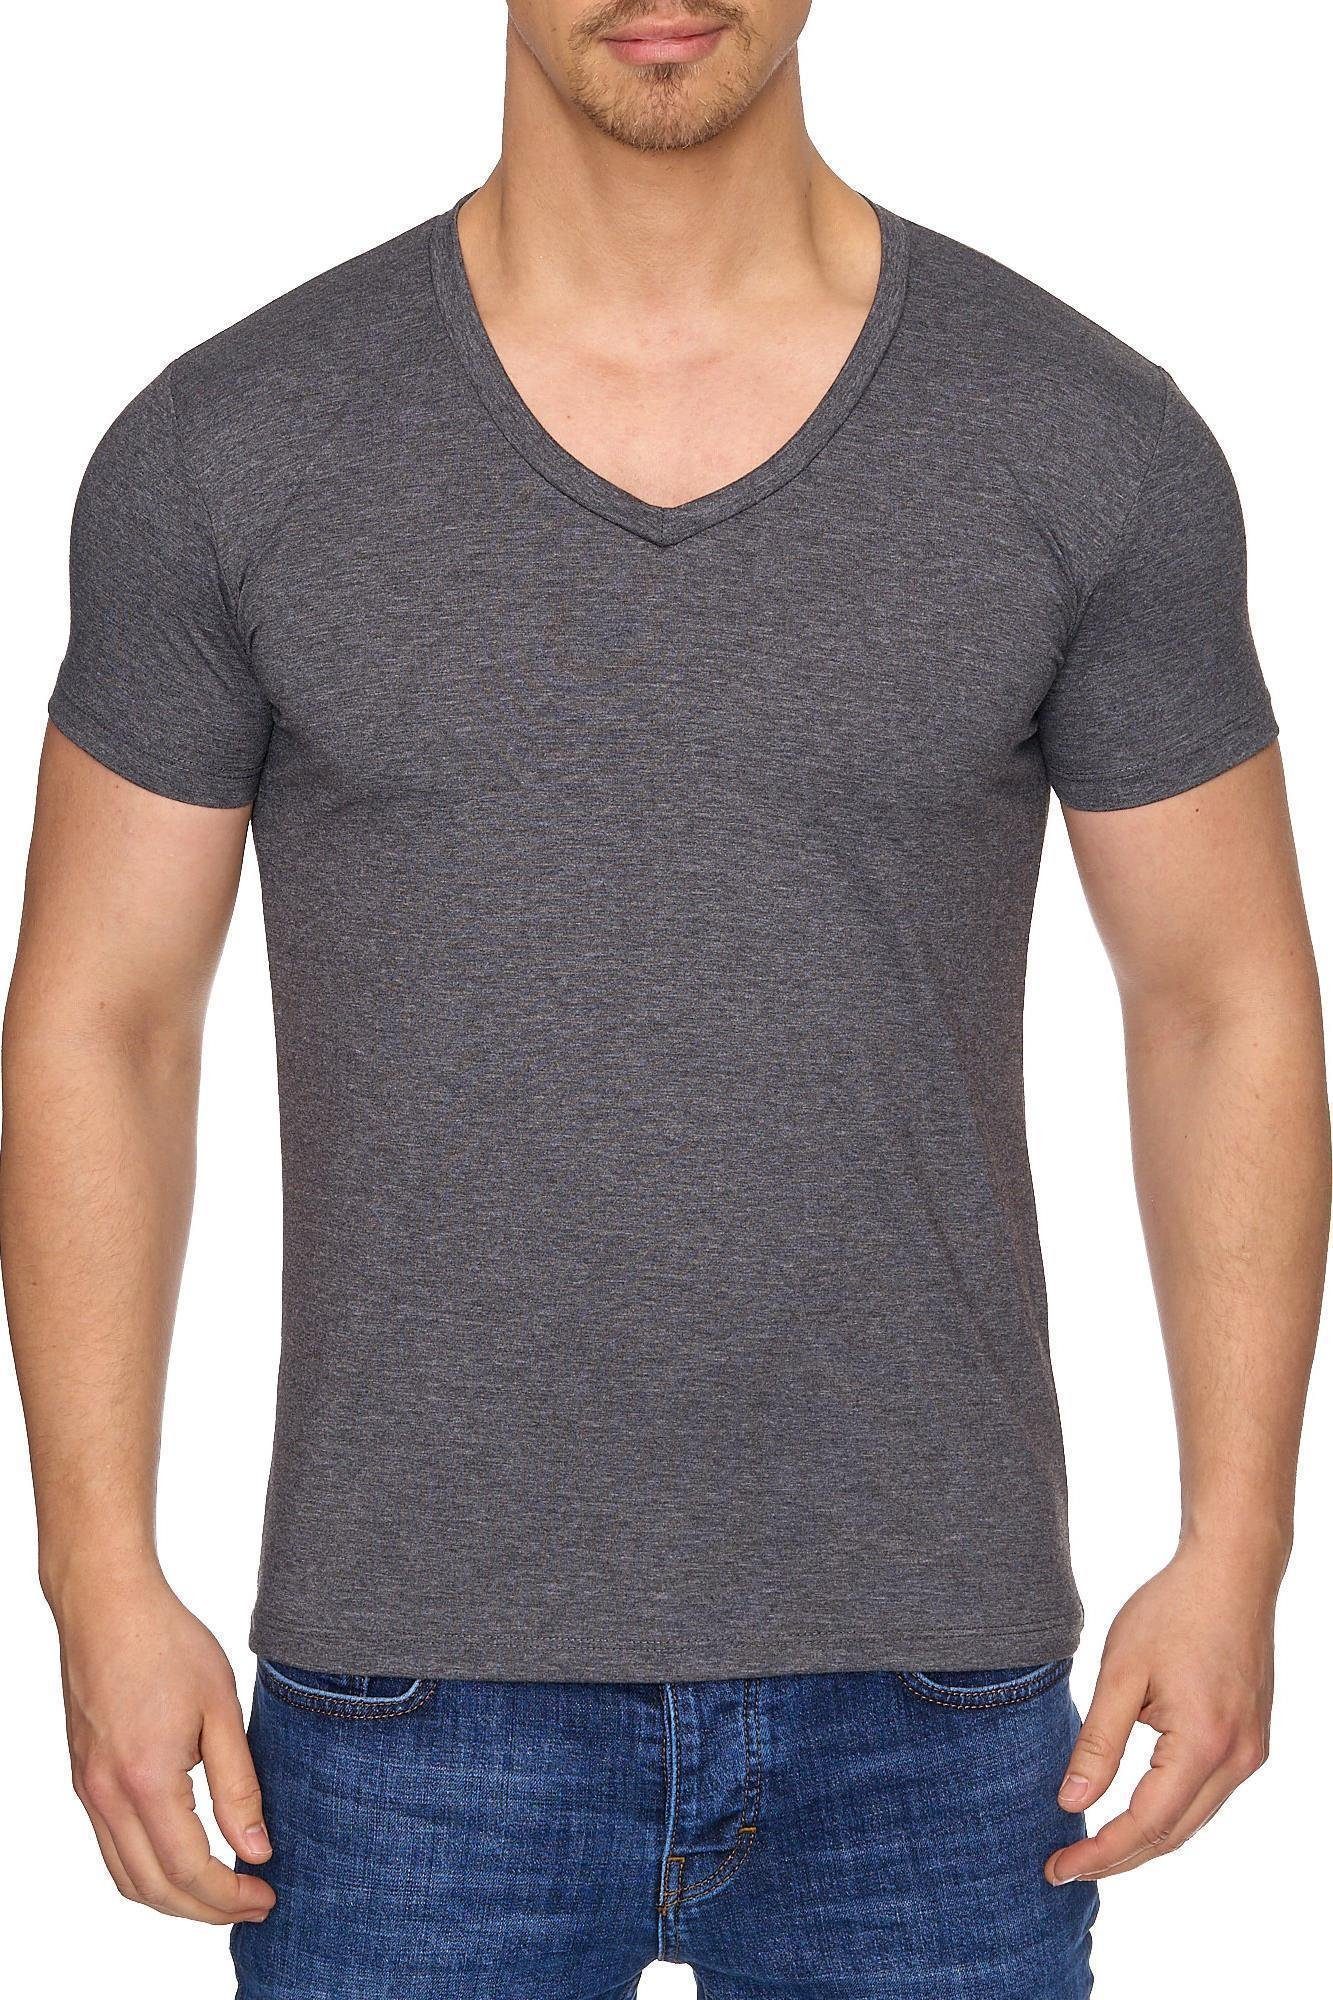 Tazzio V-Shirt 17100 zeitloses Basic T-Shirt